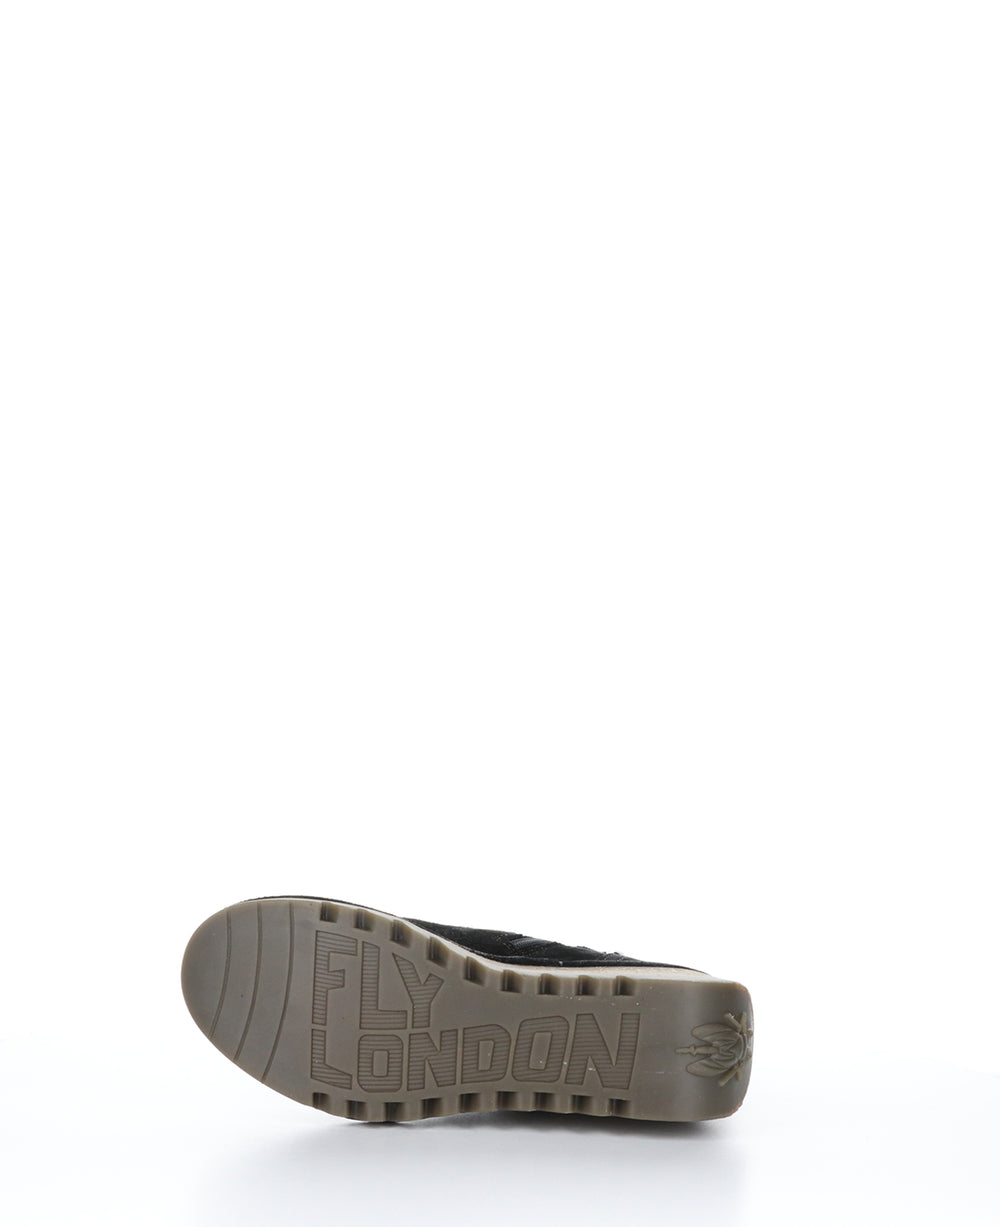 NERY336FLY Black Zip Up Ankle Boots|NERY336FLY Bottines avec Fermeture Zippée in Noir